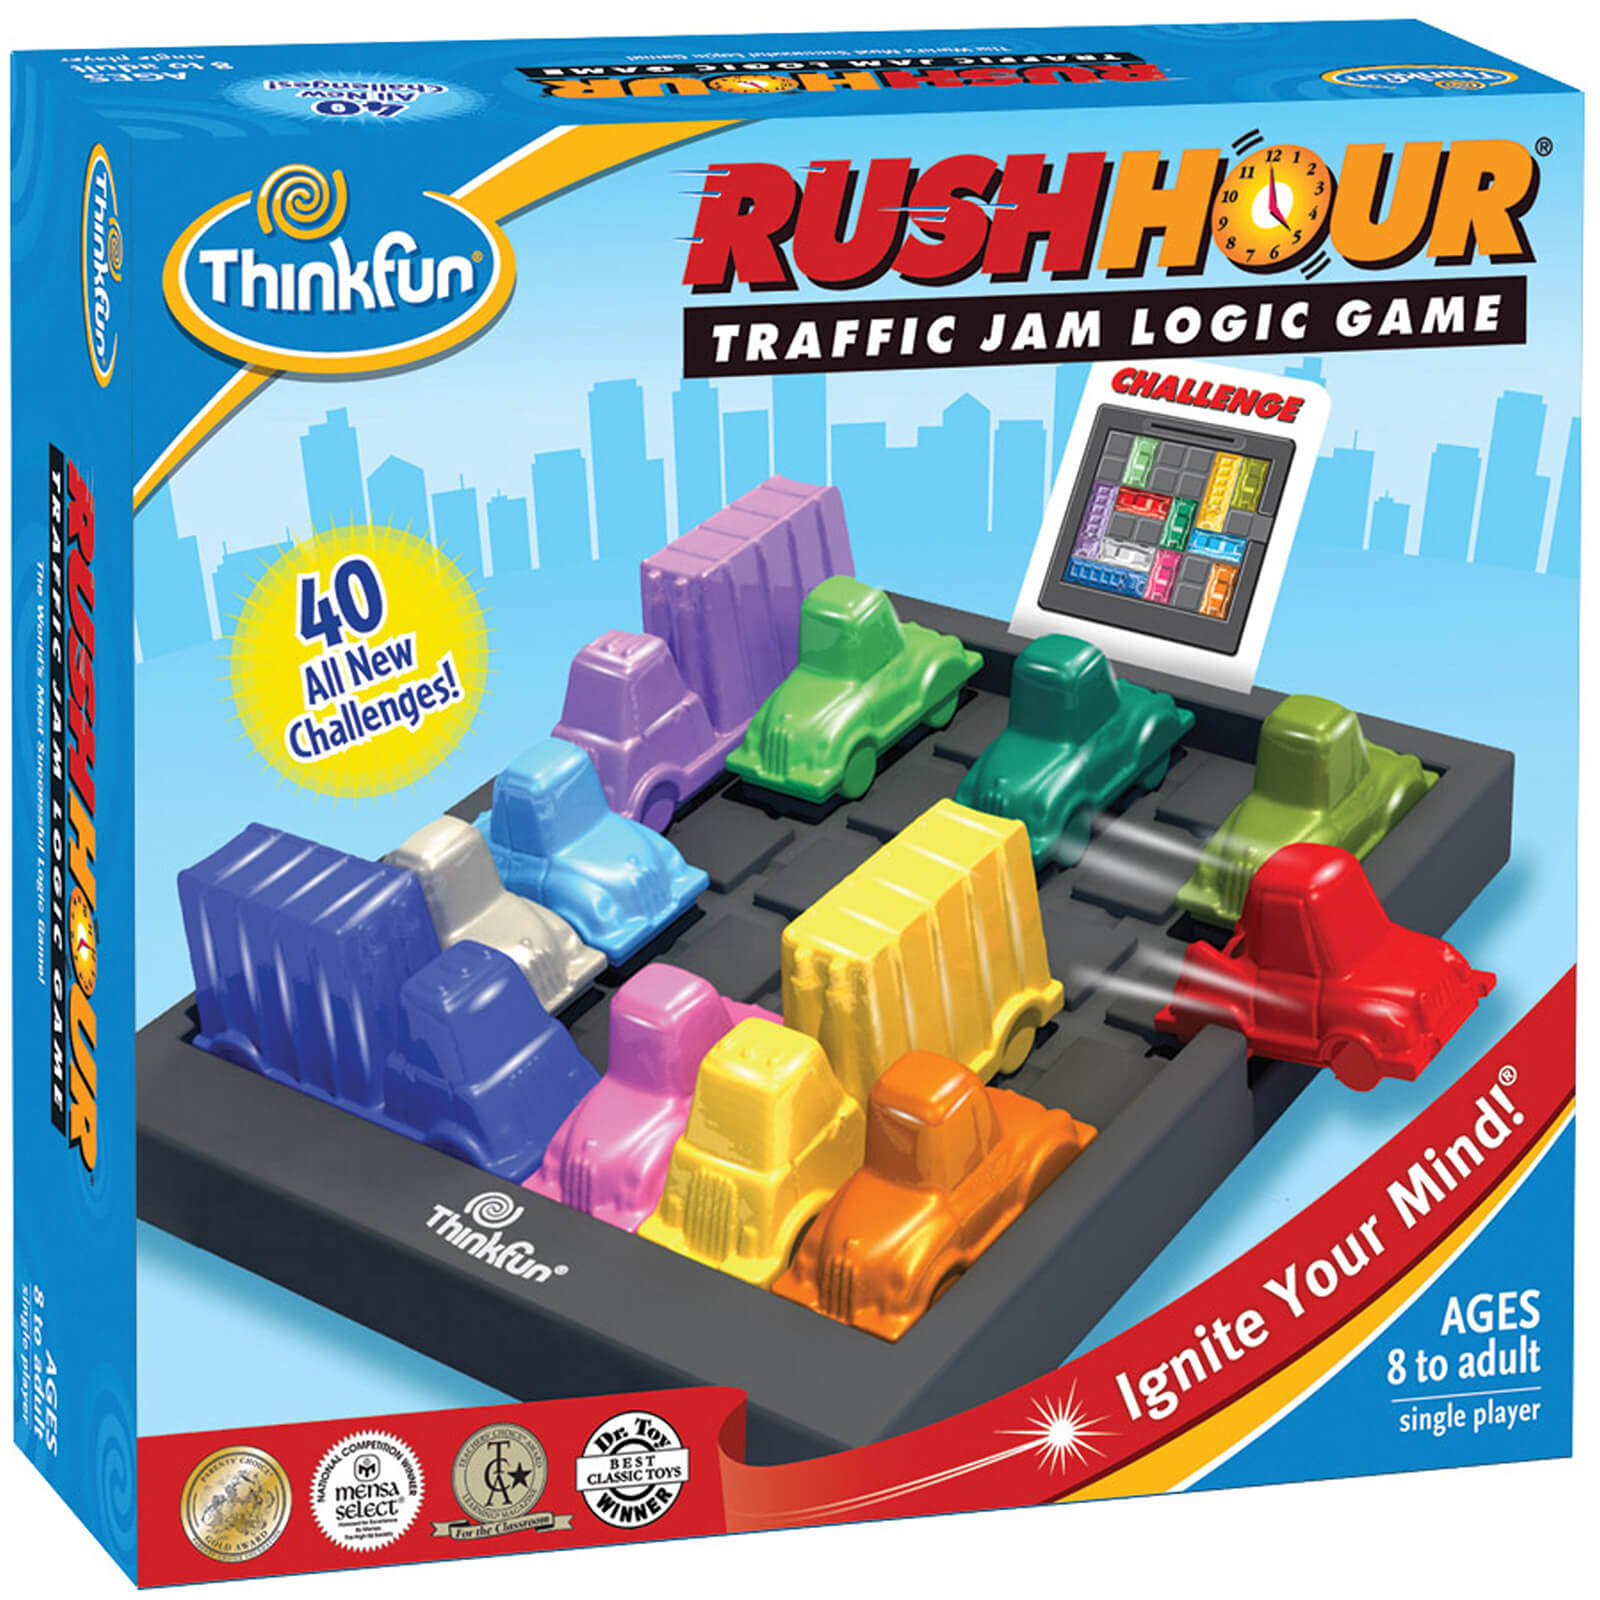 Rush Hour Traffic Logic Game